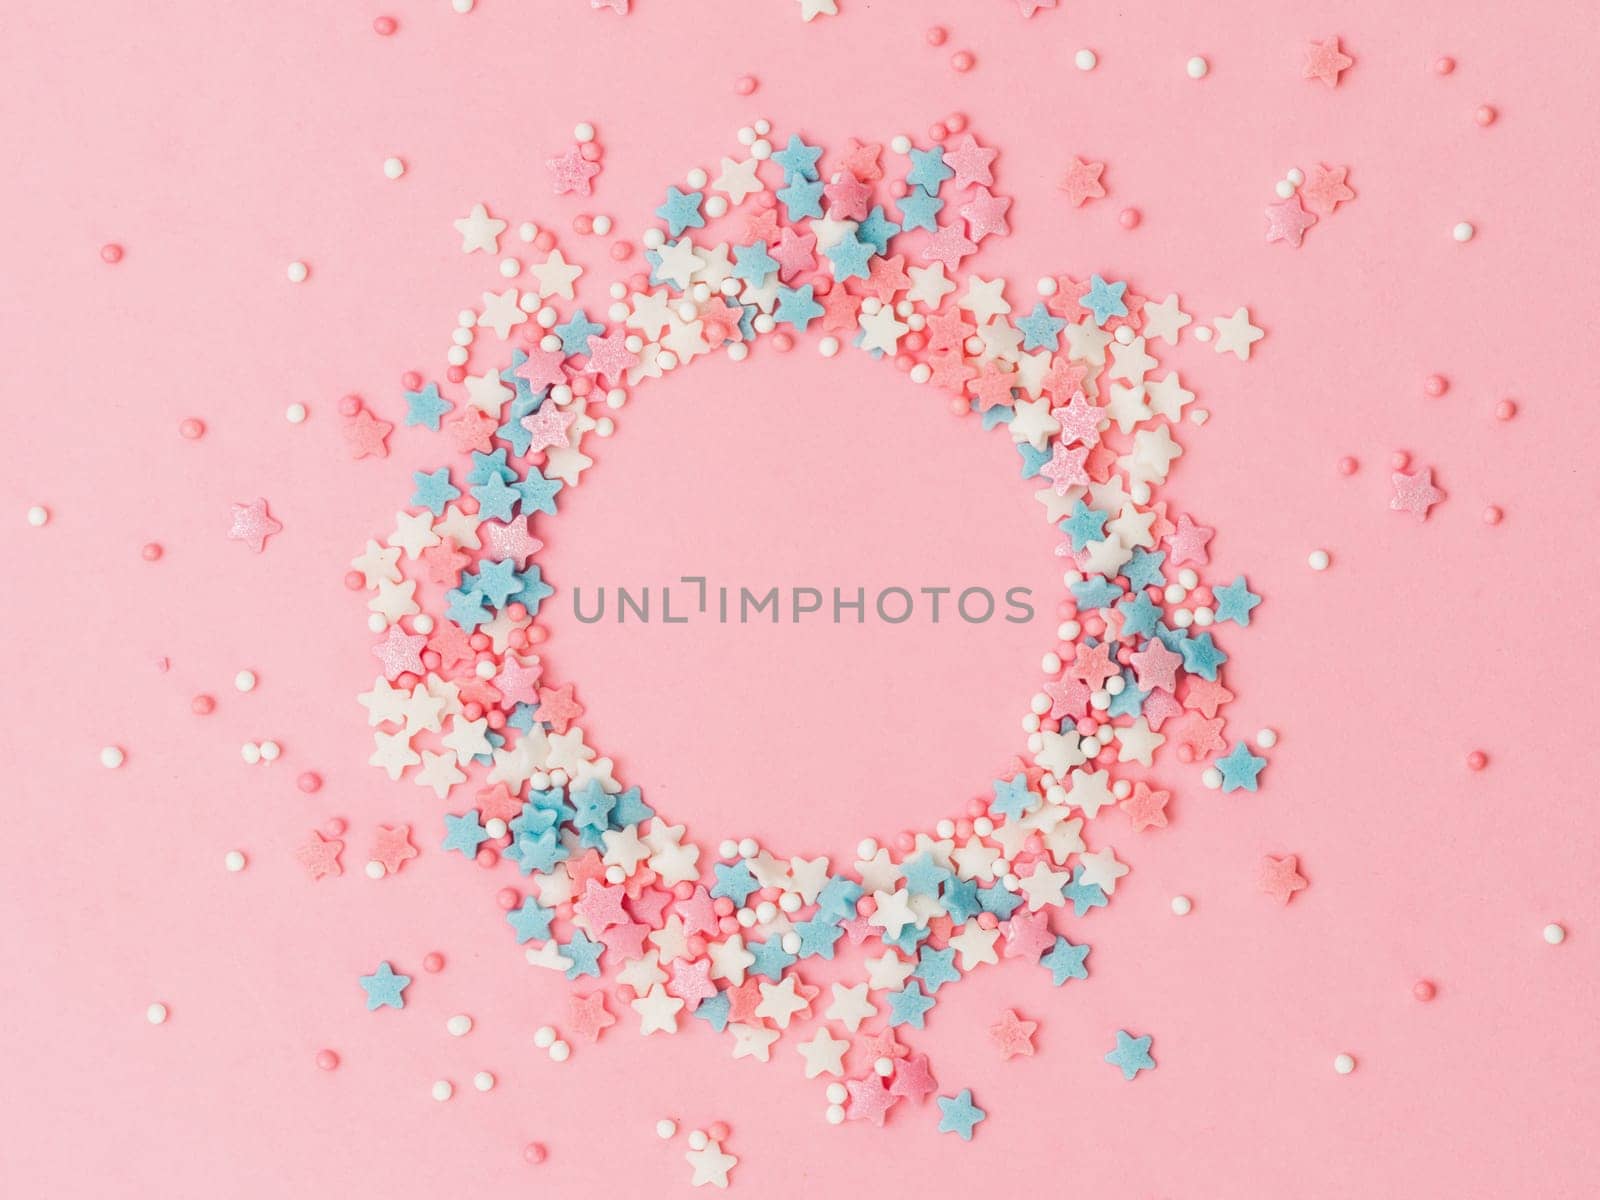 Sprinkles in round spahe on pink, copy space by fascinadora